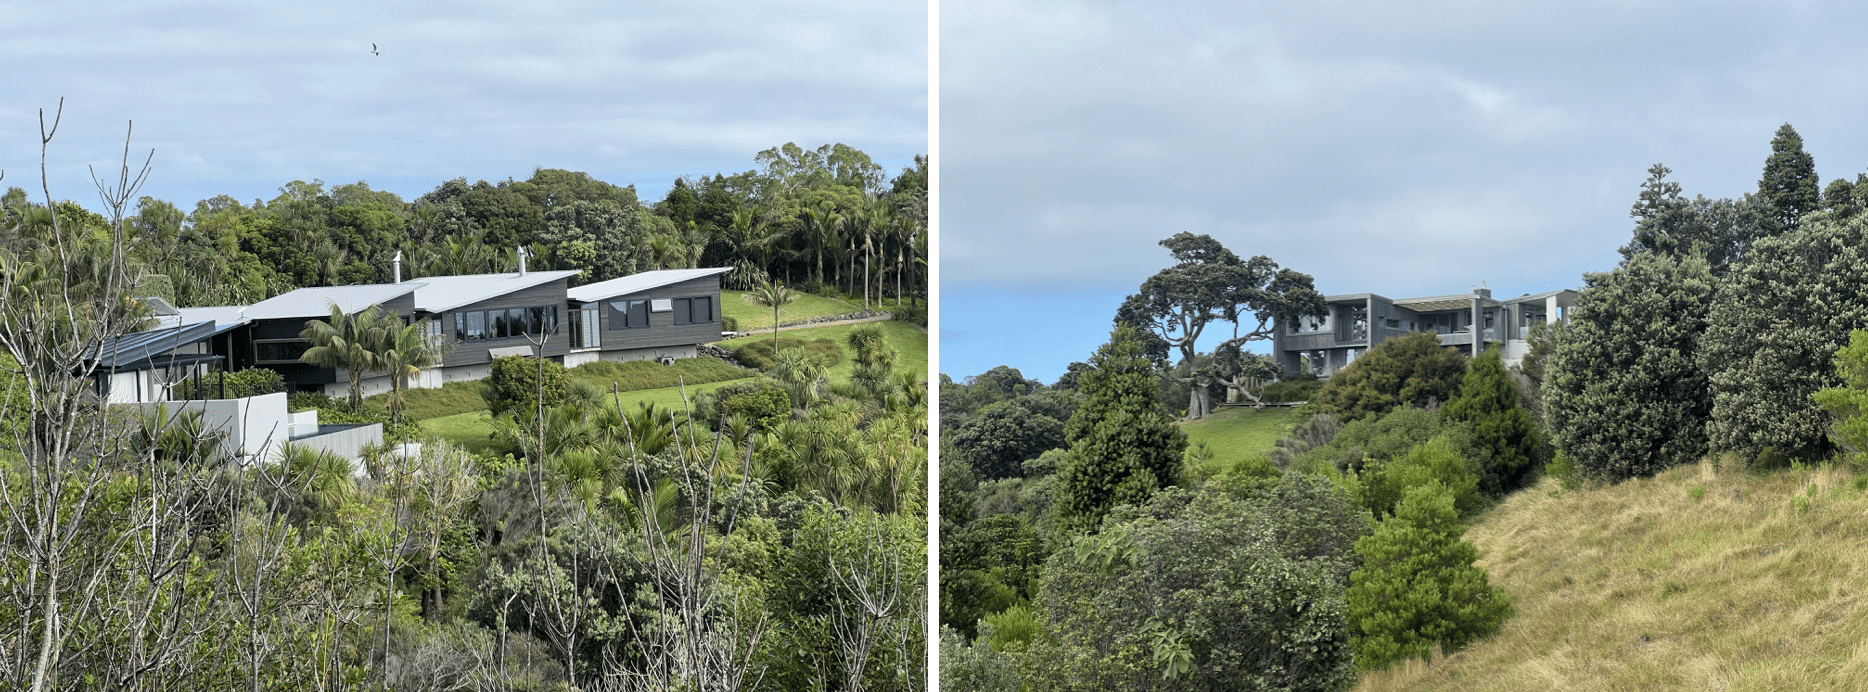 belles maisons sur waiheke island en nouvelle zelande